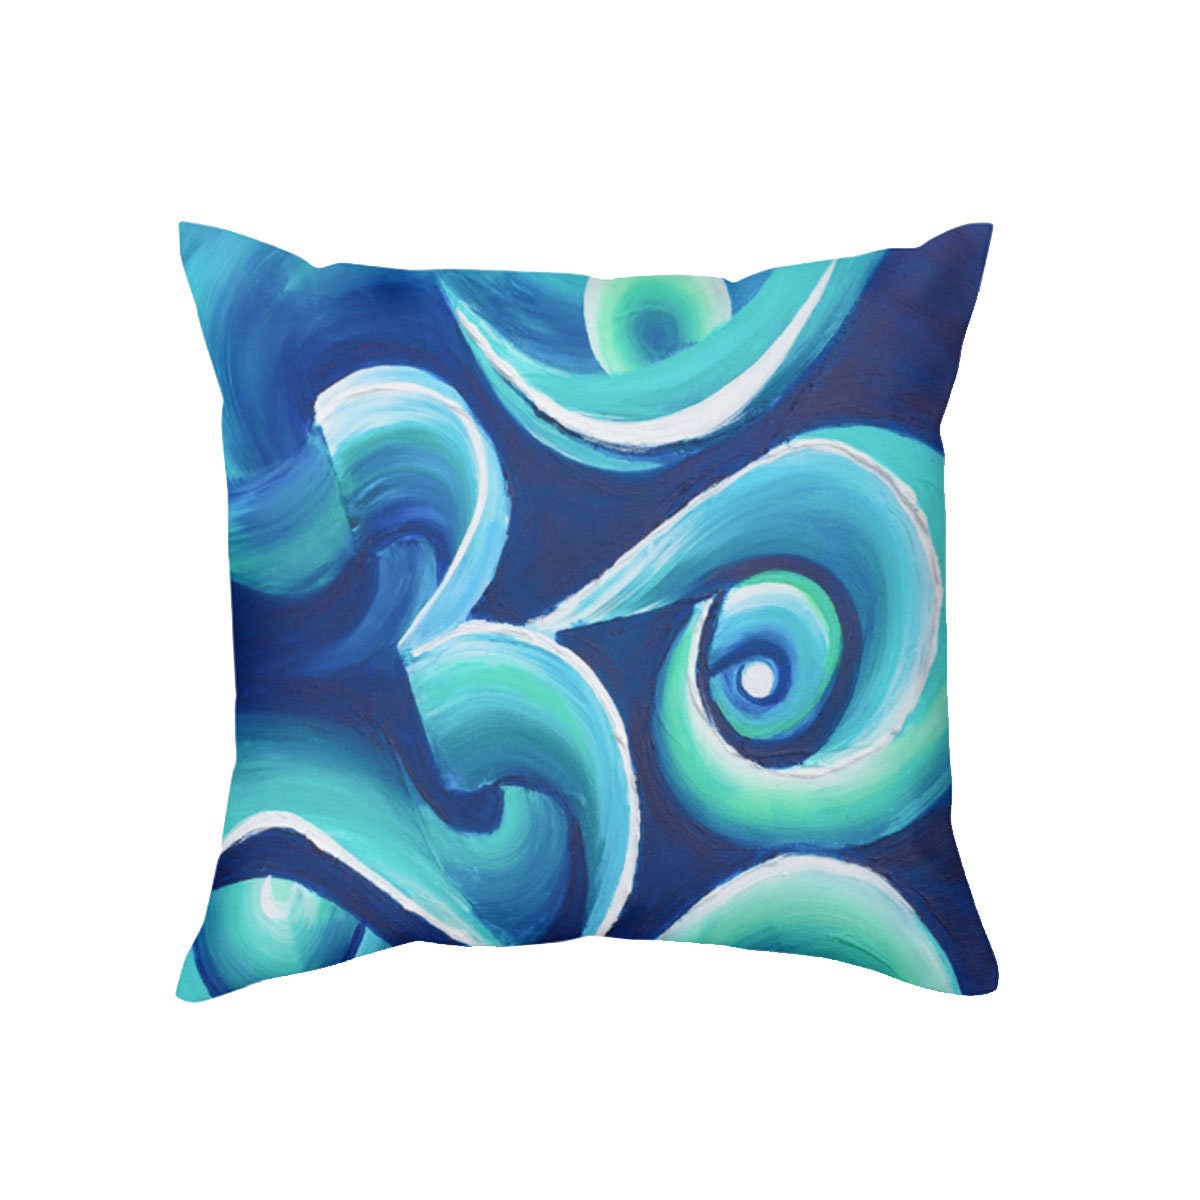 OM Pillow Spiritual Gift couch Pillows Om Pillows Blue Pillow Artsy pillow spiritual pillow om art cheap gift blue pillows artsy pillo